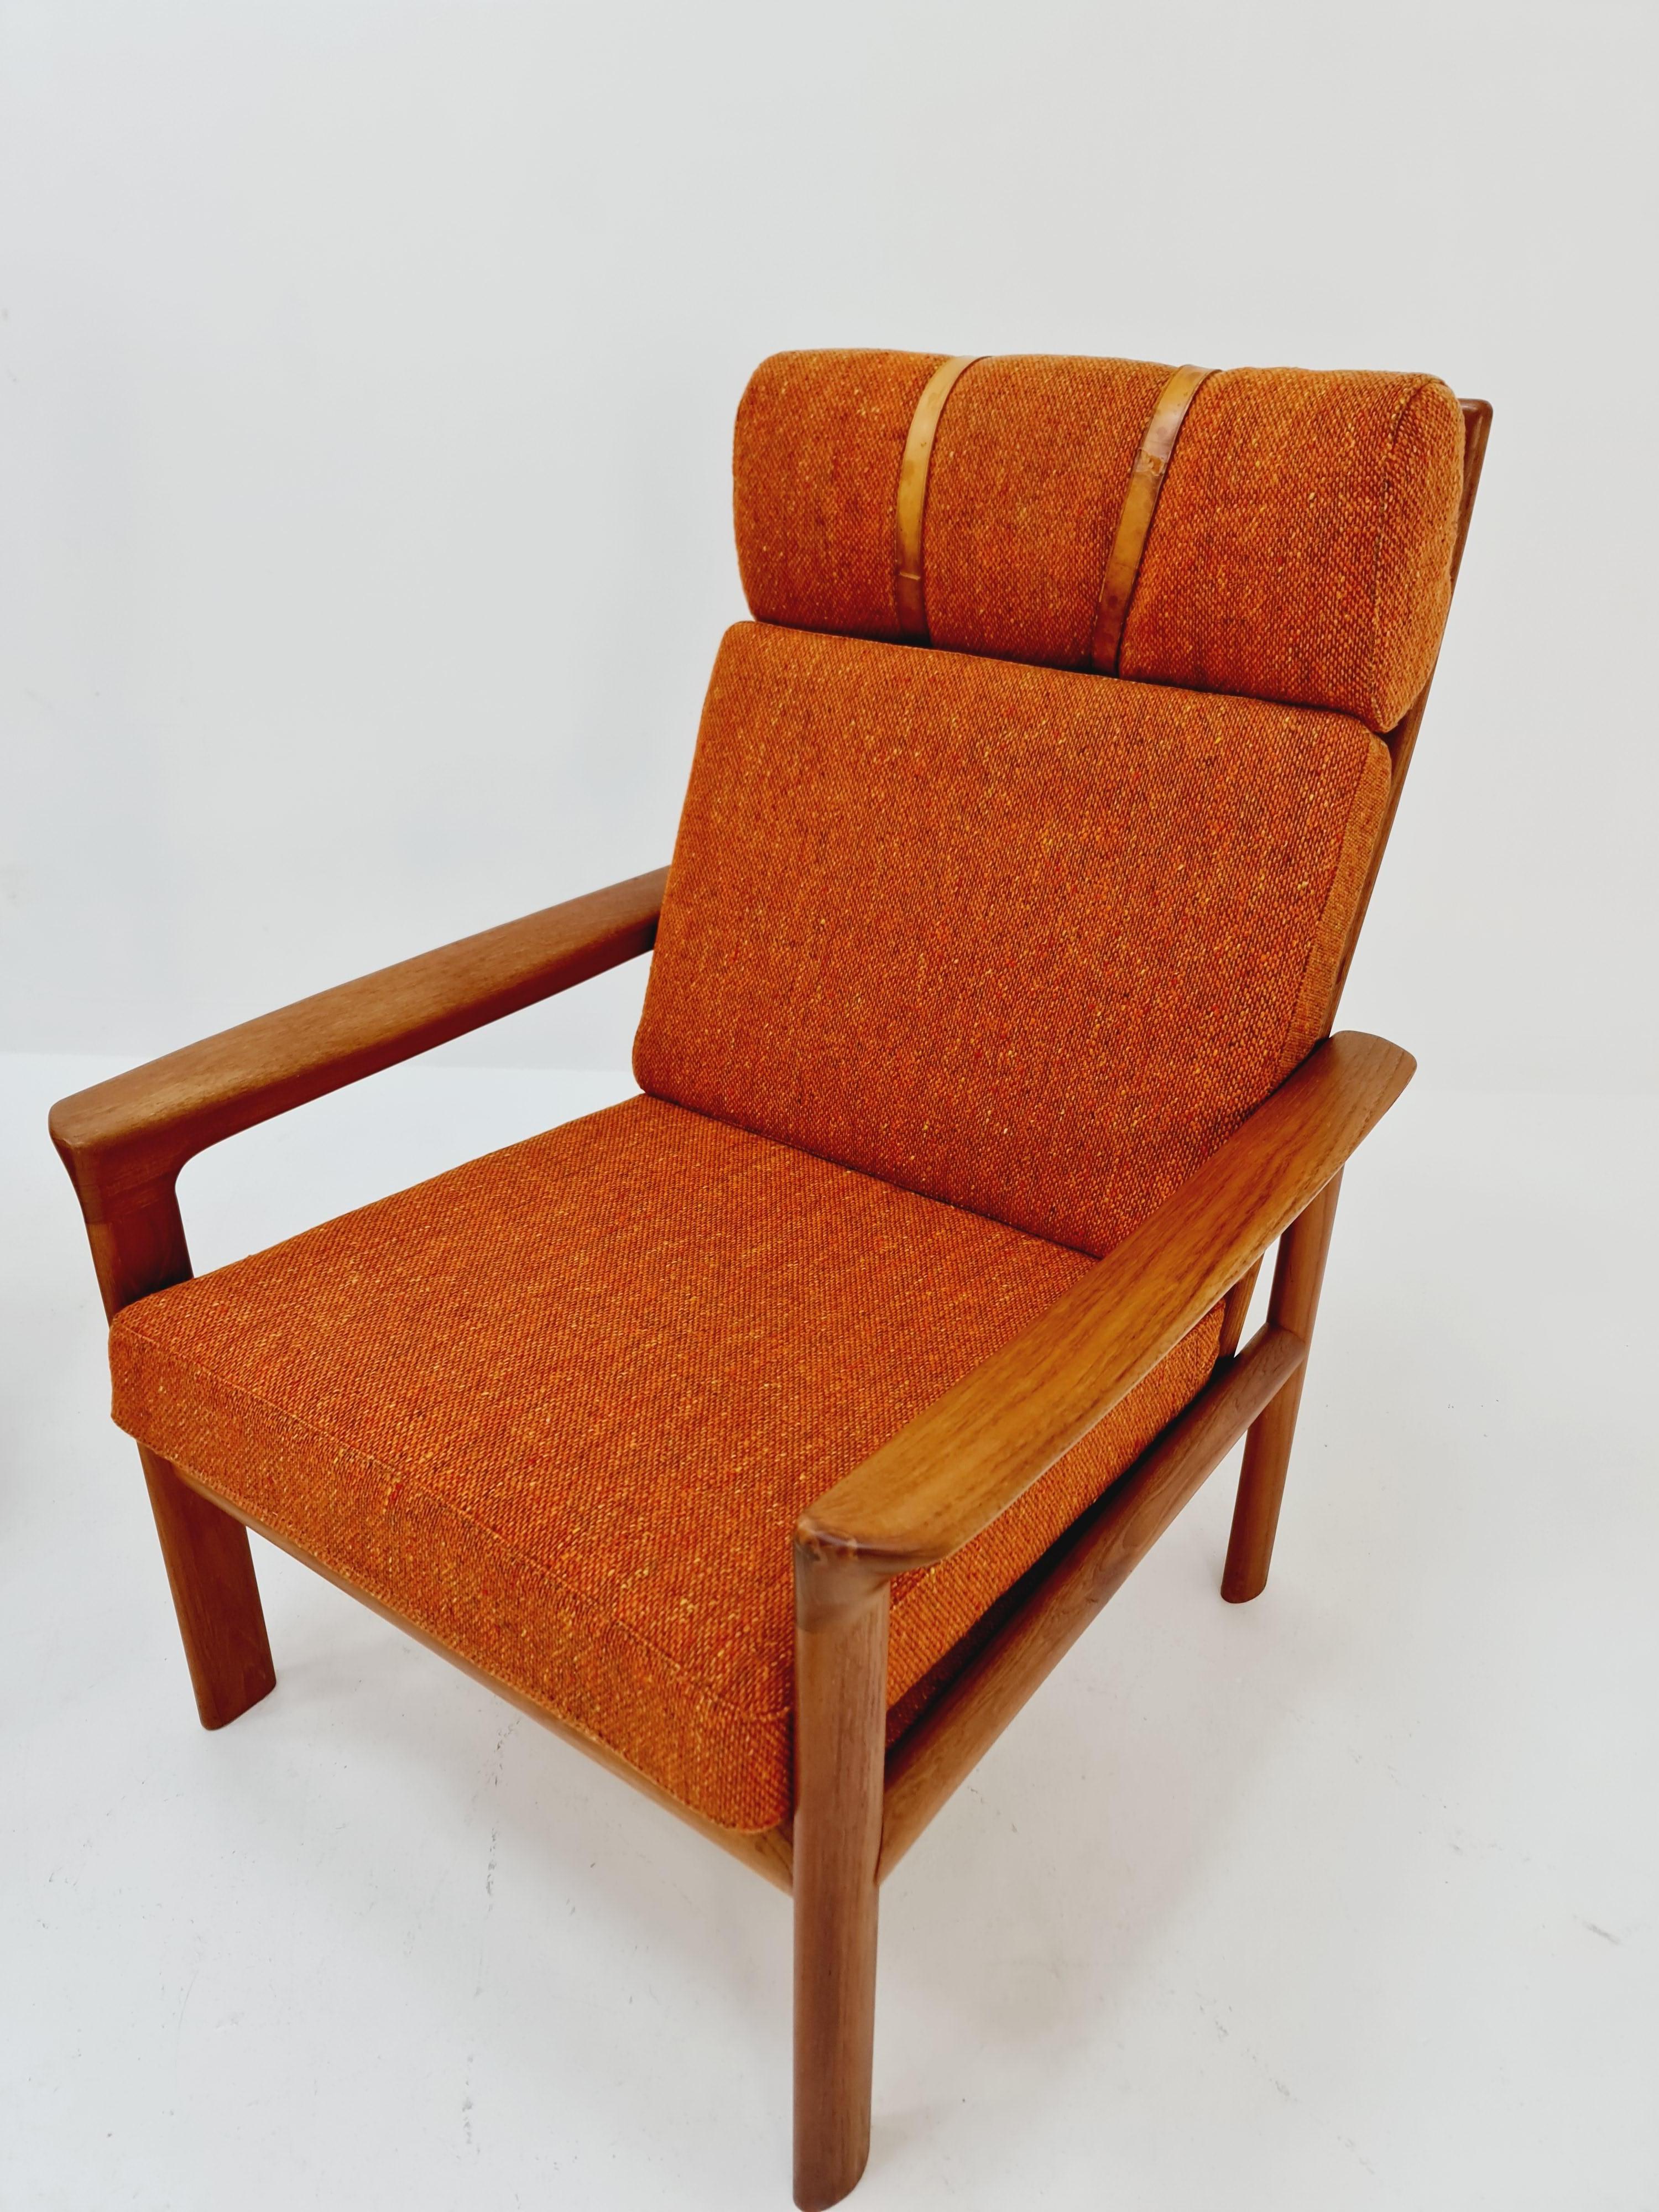 Leather Mid century teak easy lounge high back chairs by Sven Ellekaer for Komfort  For Sale